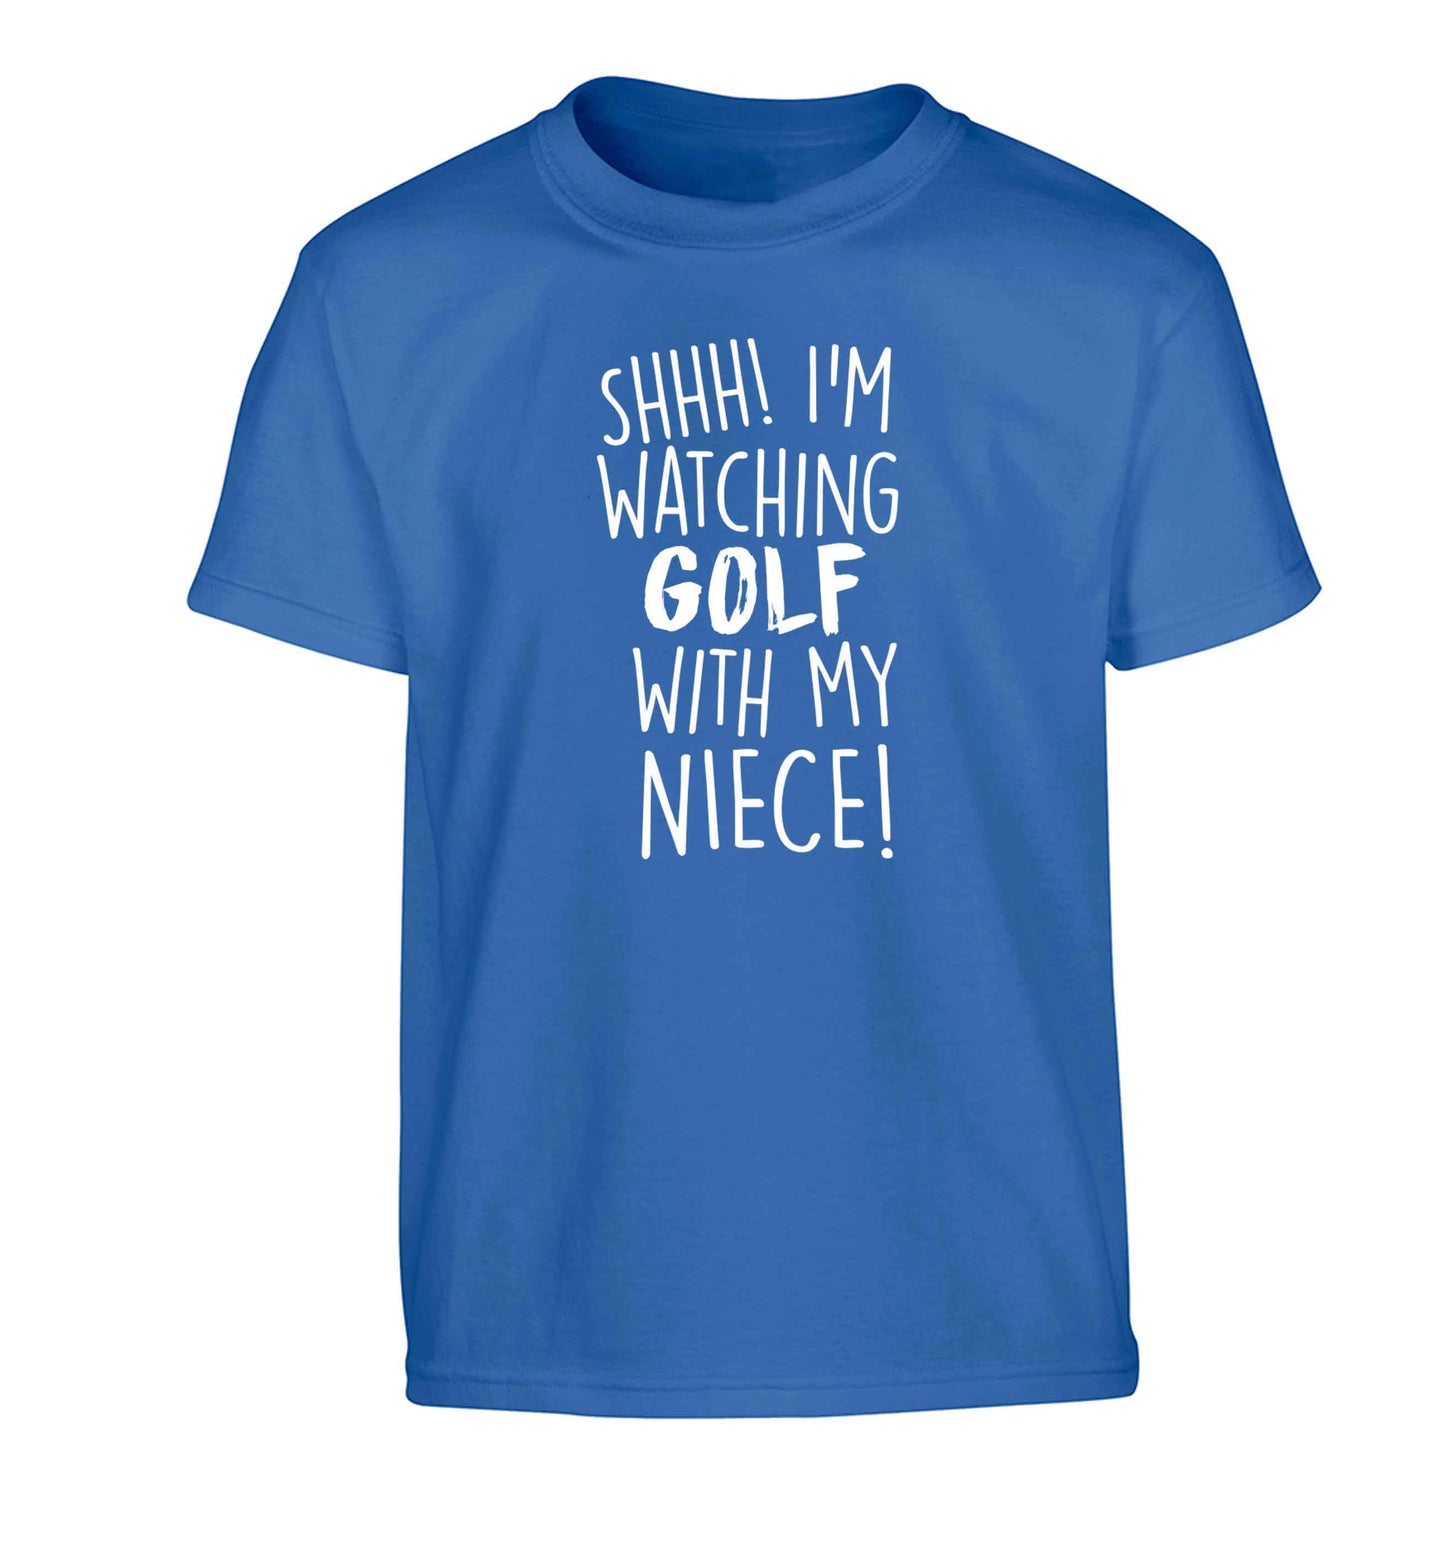 Shh I'm watching golf with my niece Children's blue Tshirt 12-13 Years